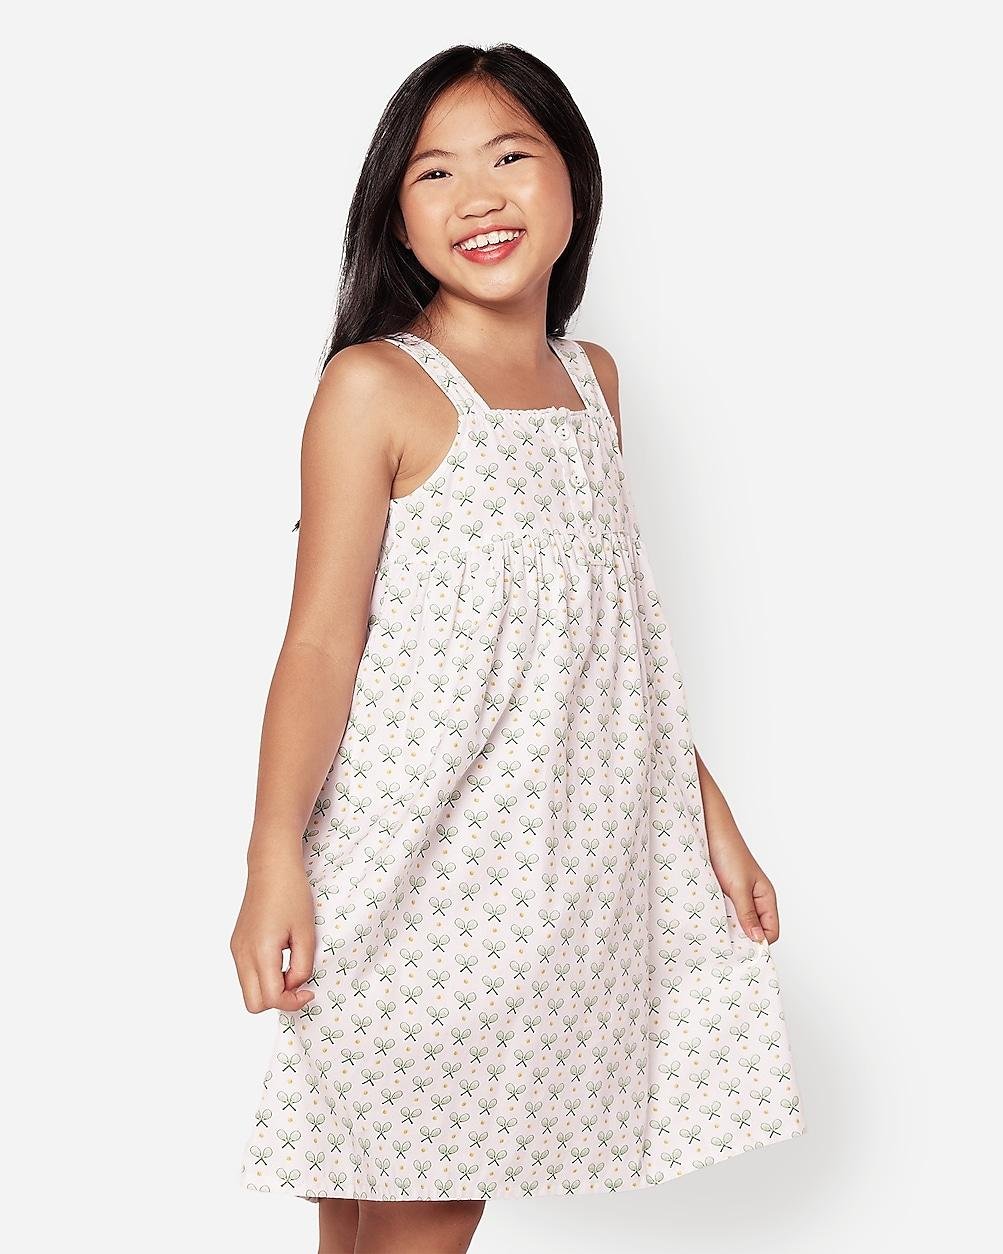 Petite Plume™ kids' Charlotte nightgown by J.CREW